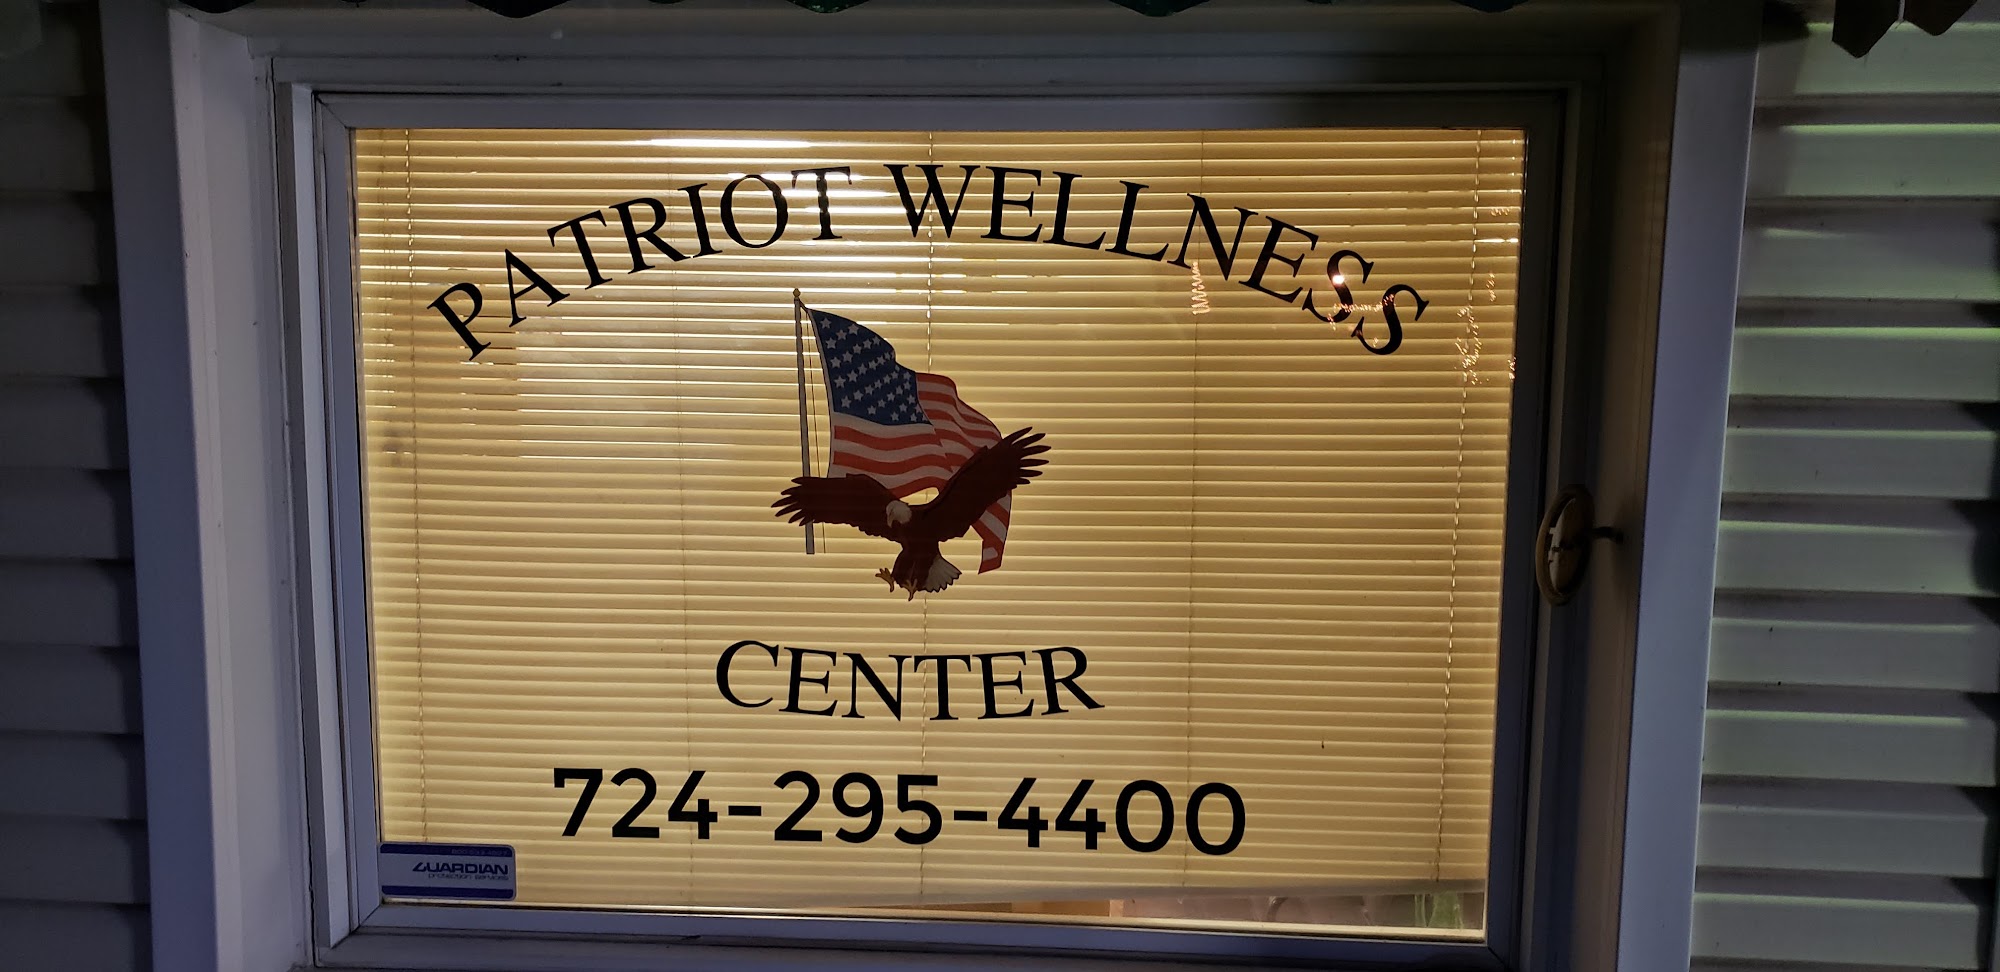 Patriot Wellness Center 996 Freeport Rd, Freeport Pennsylvania 16229